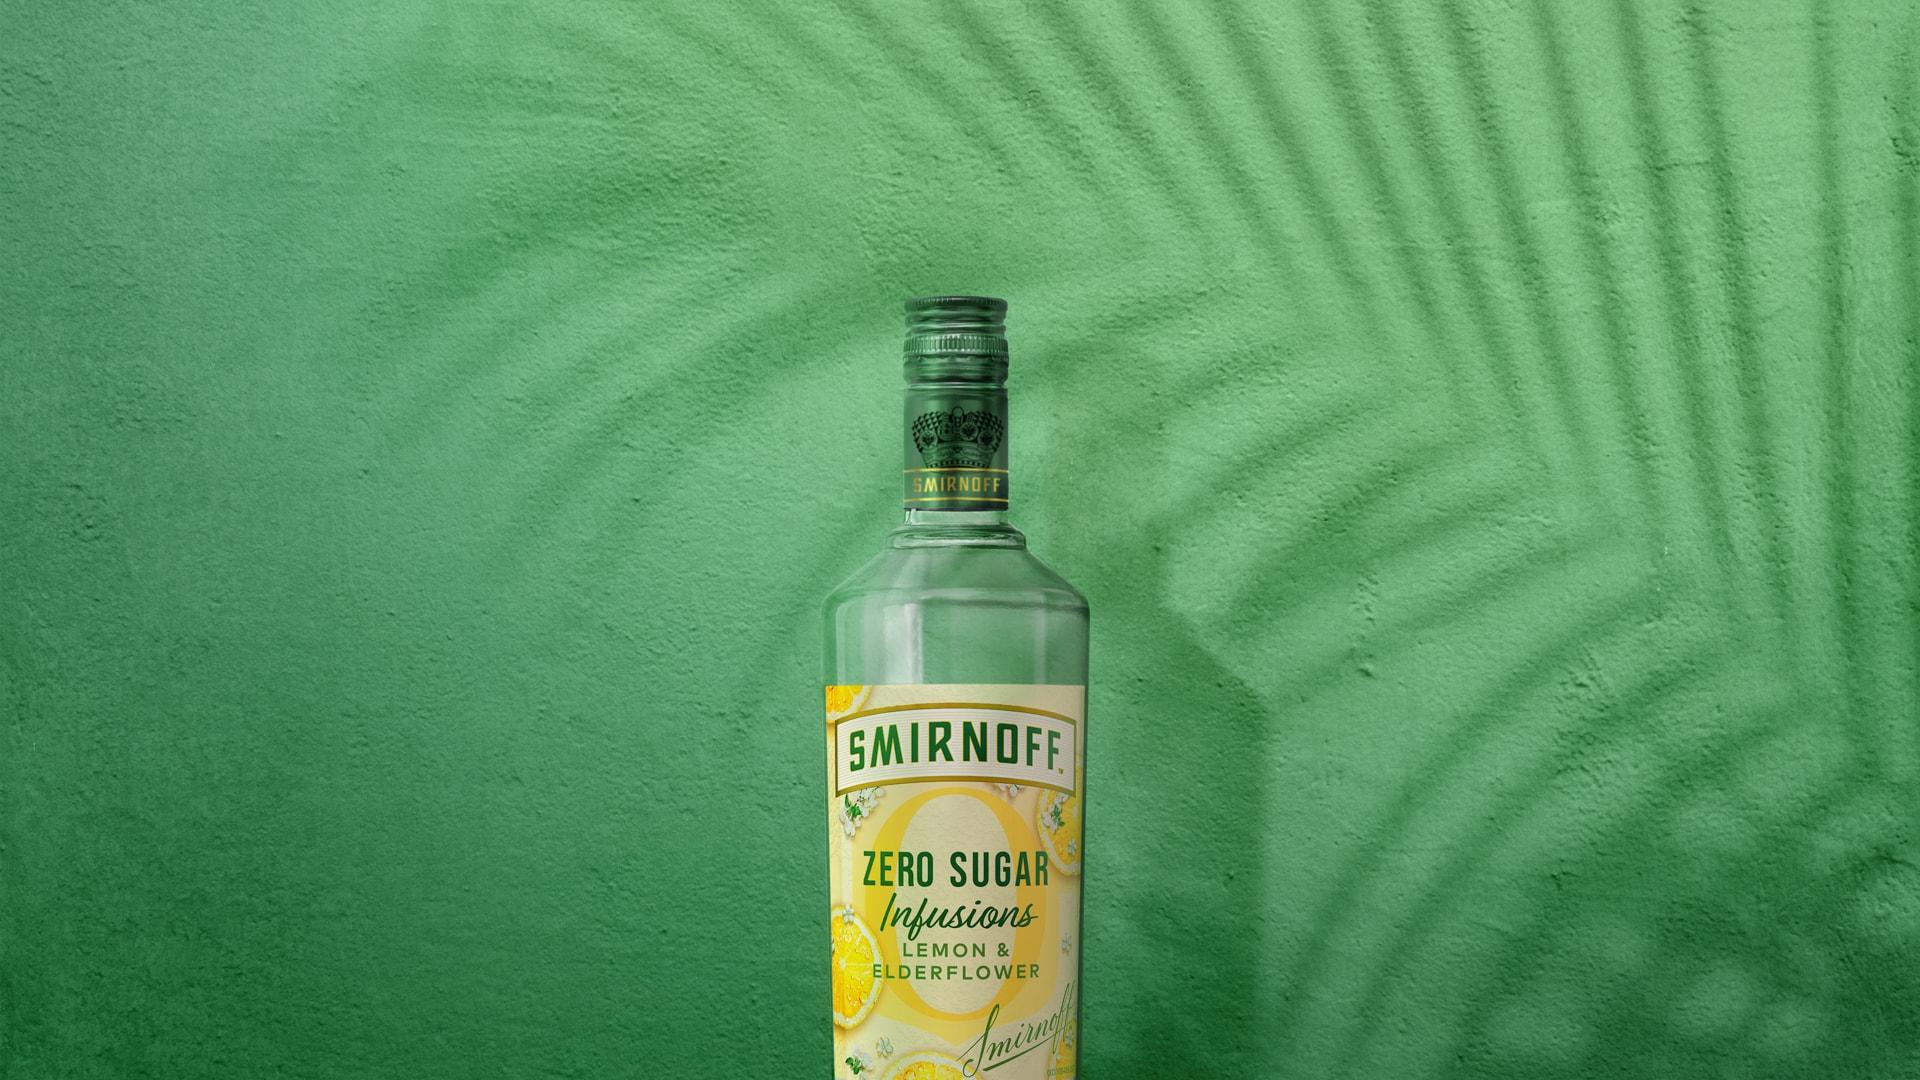 Smirnoff Zero Sugar Infusions Lemon & Elderflower on green tropical background